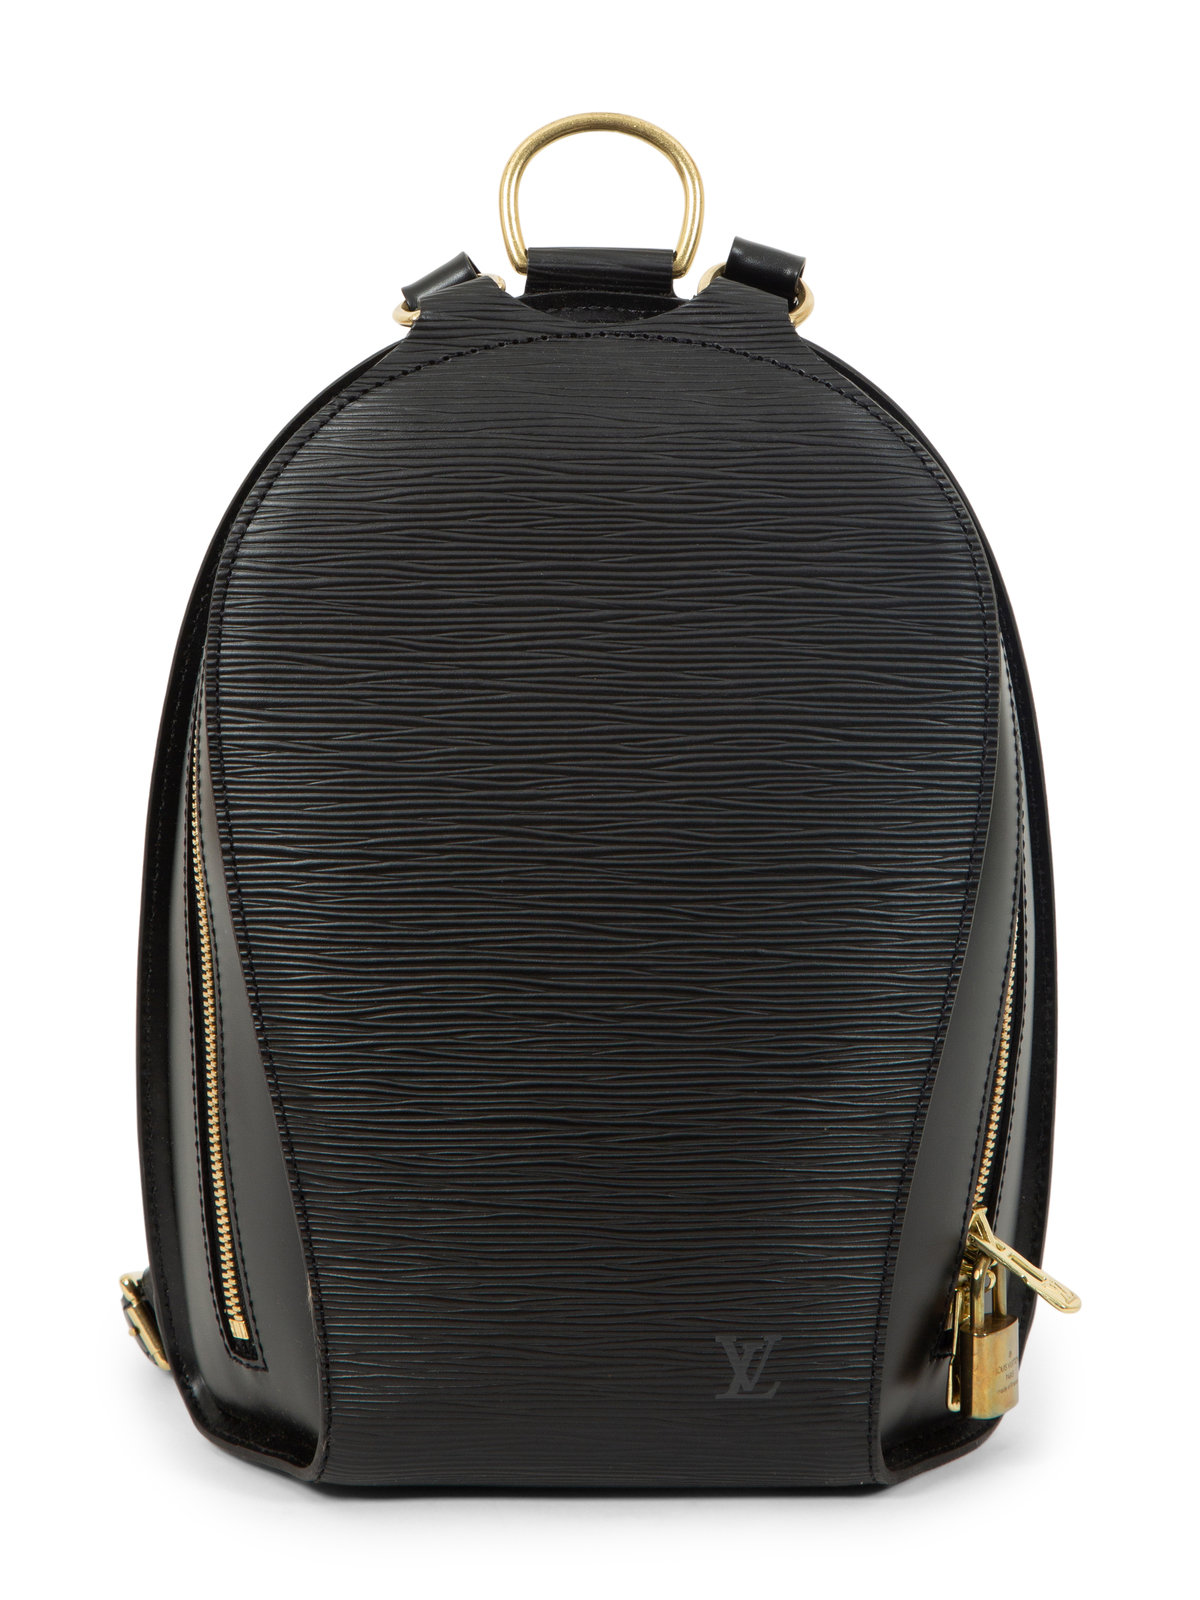 Louis Vuitton Palm Springs Mini Review + Wear & Tear